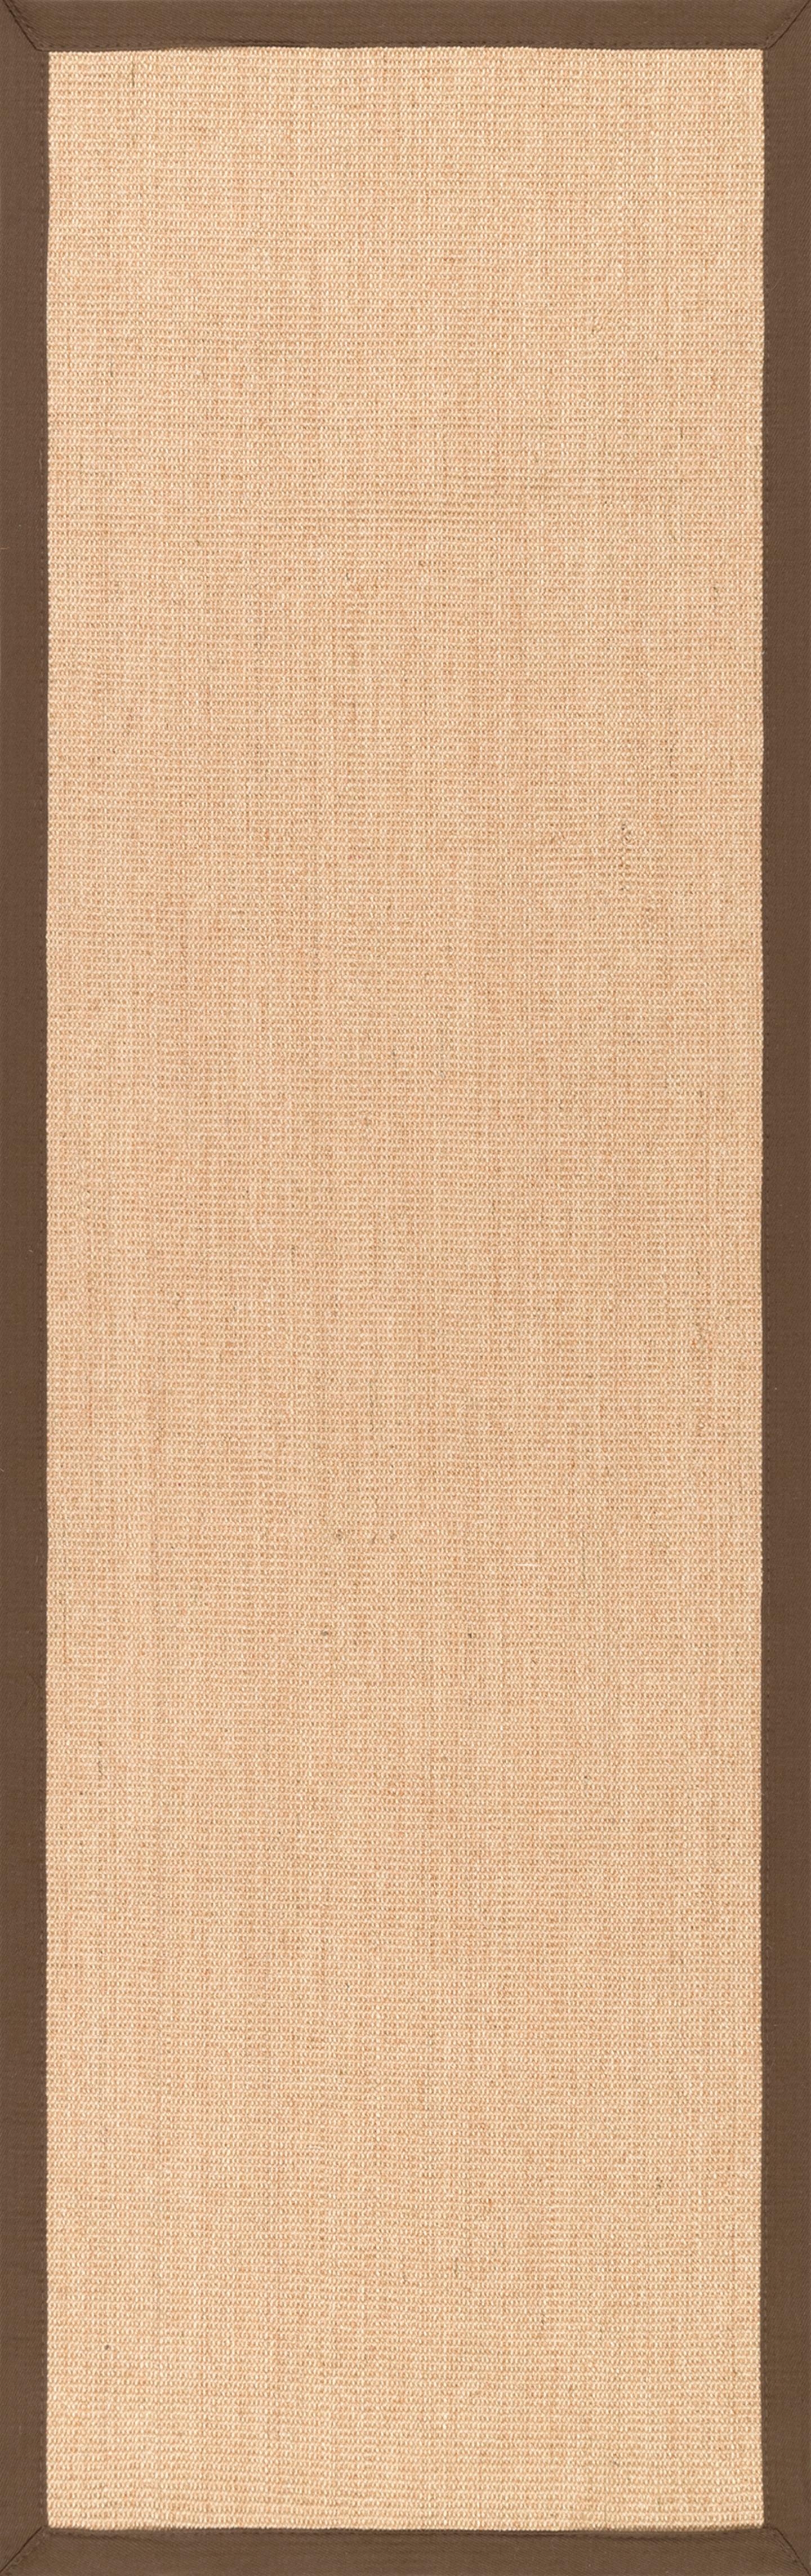 Machine Woven orsay sisal rug Area Rug - Image 4